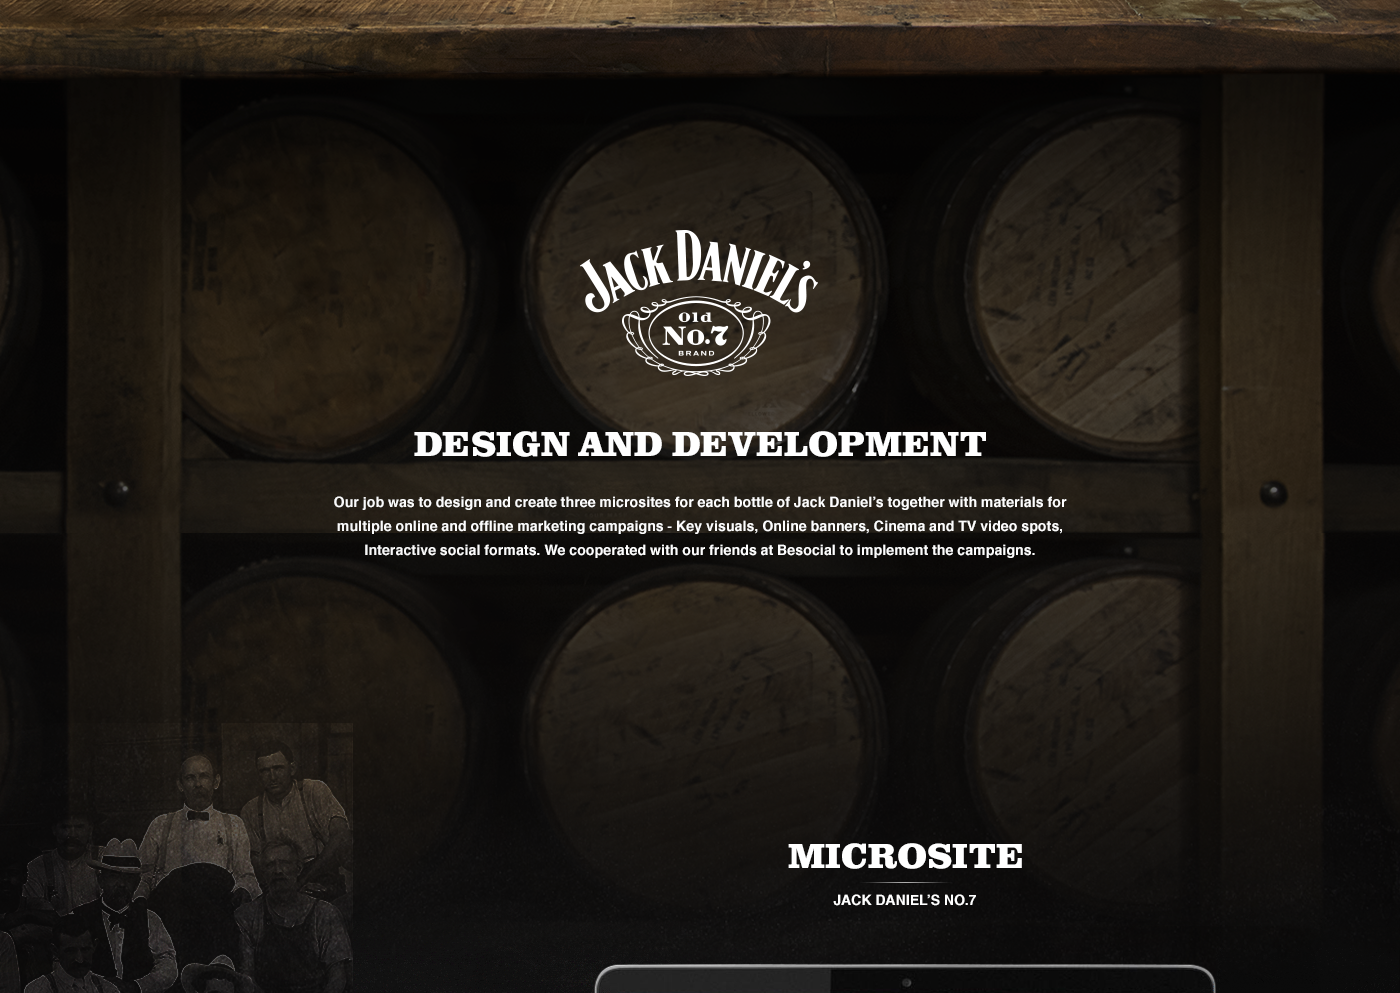 jack daniel's development design microsite online marketing banners marketing campaign motion design